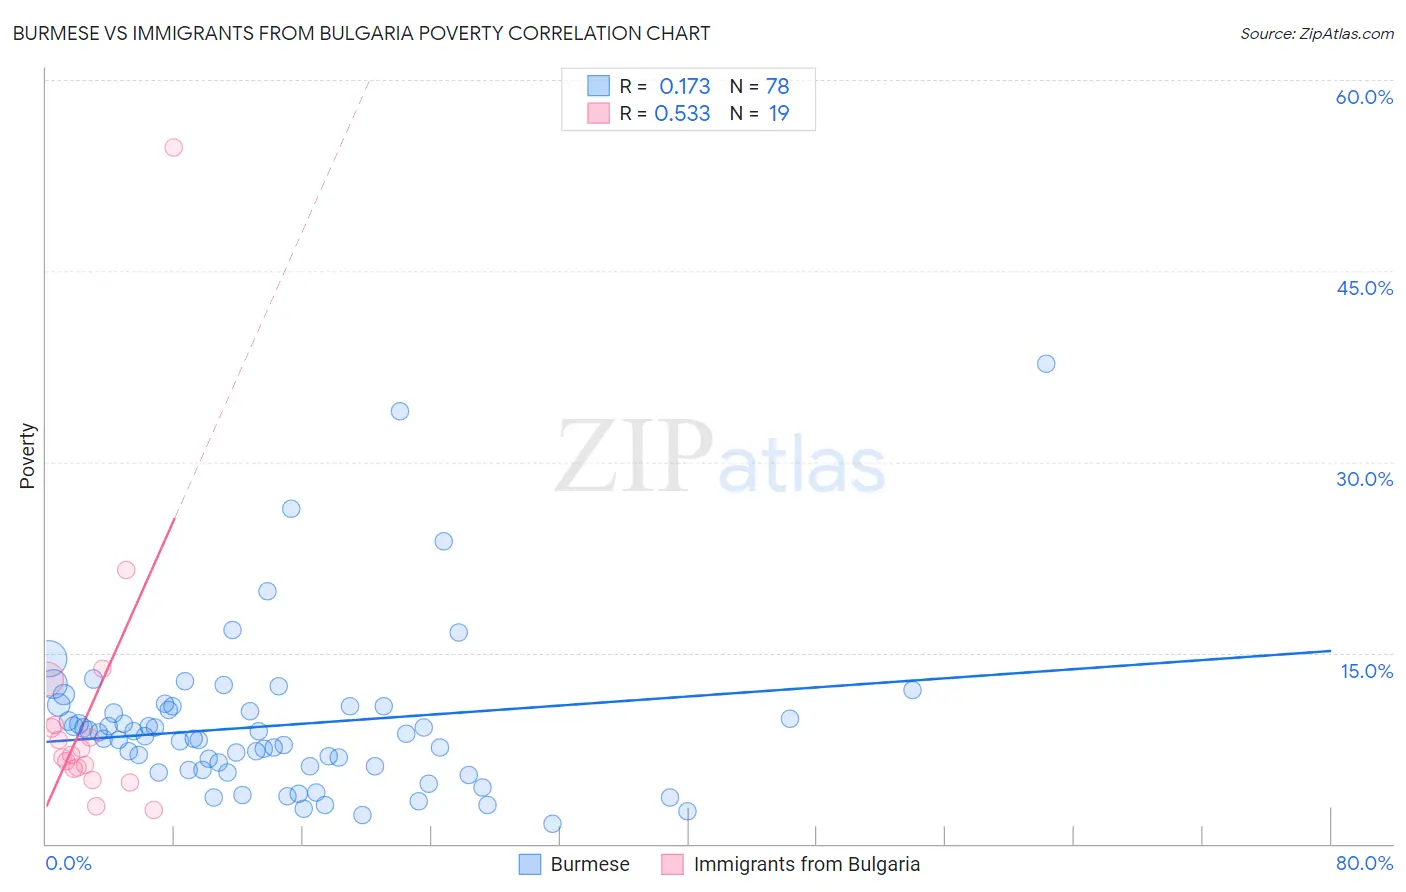 Burmese vs Immigrants from Bulgaria Poverty